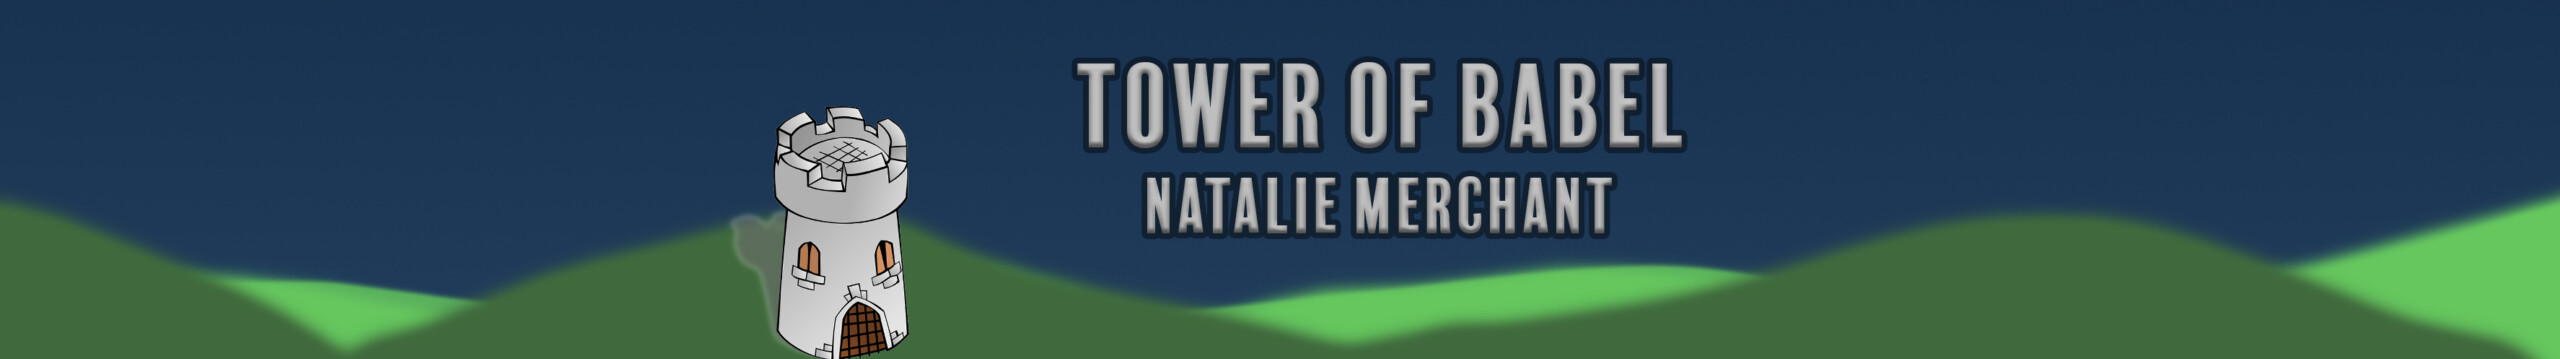 POTW: Natalie Merchant "Tower of Babel" (Banner)